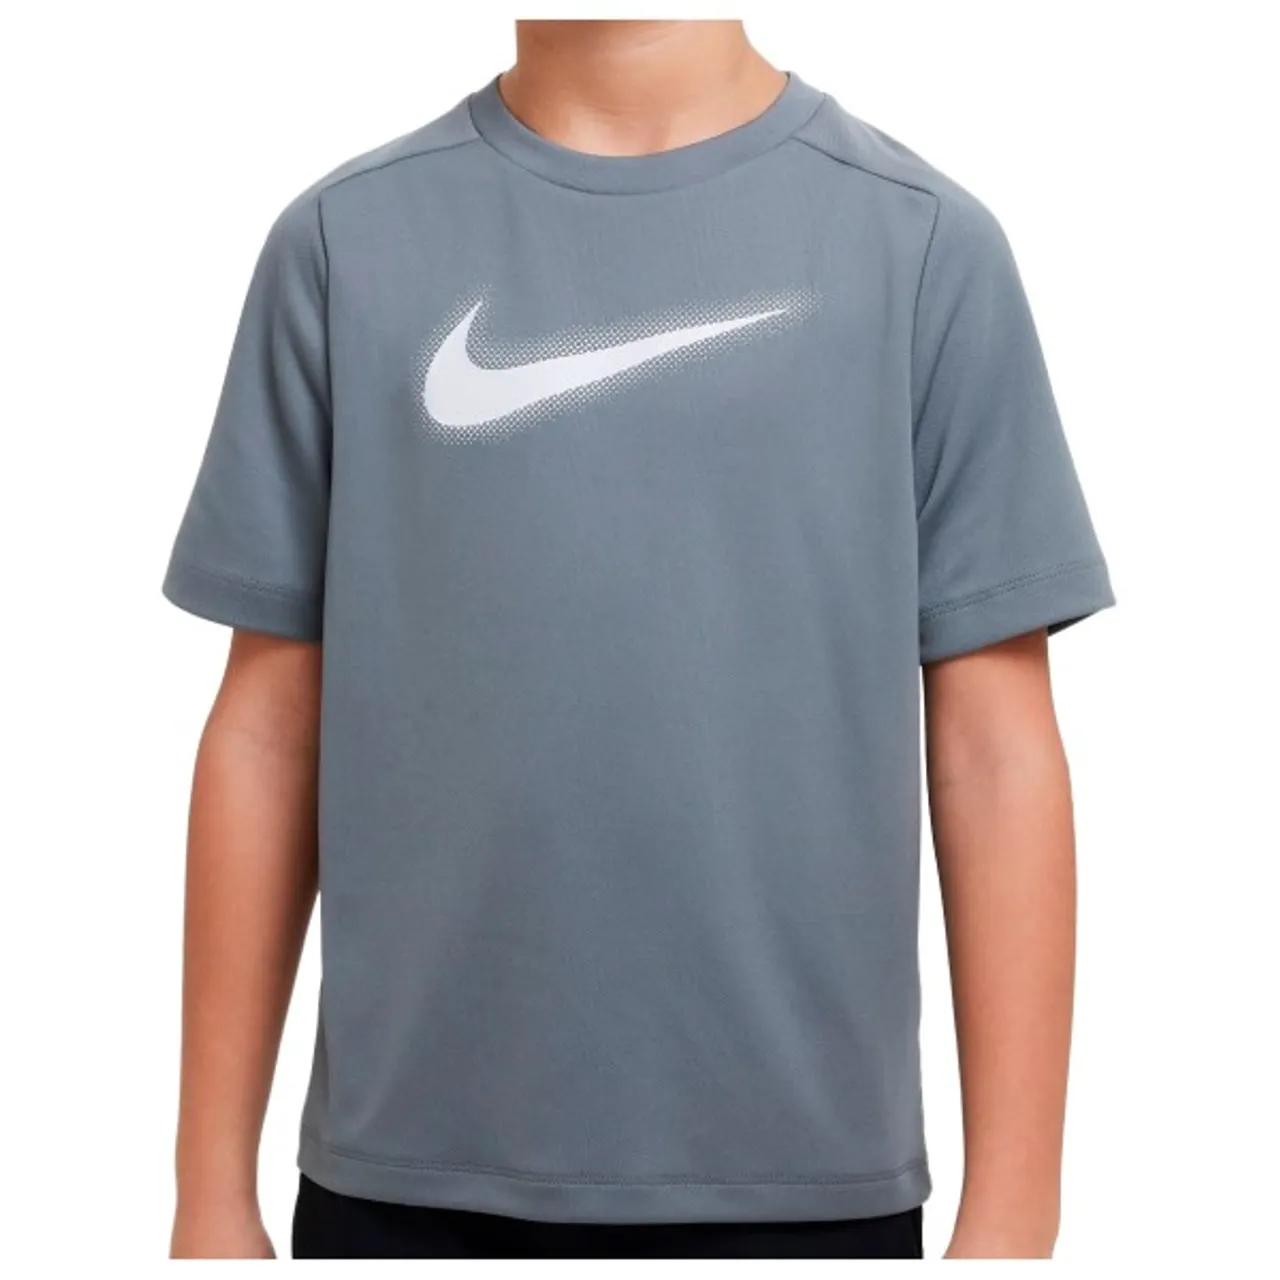 Nike - Big Kid's Dri-FIT Multi Graphic Training Top - Sport shirt